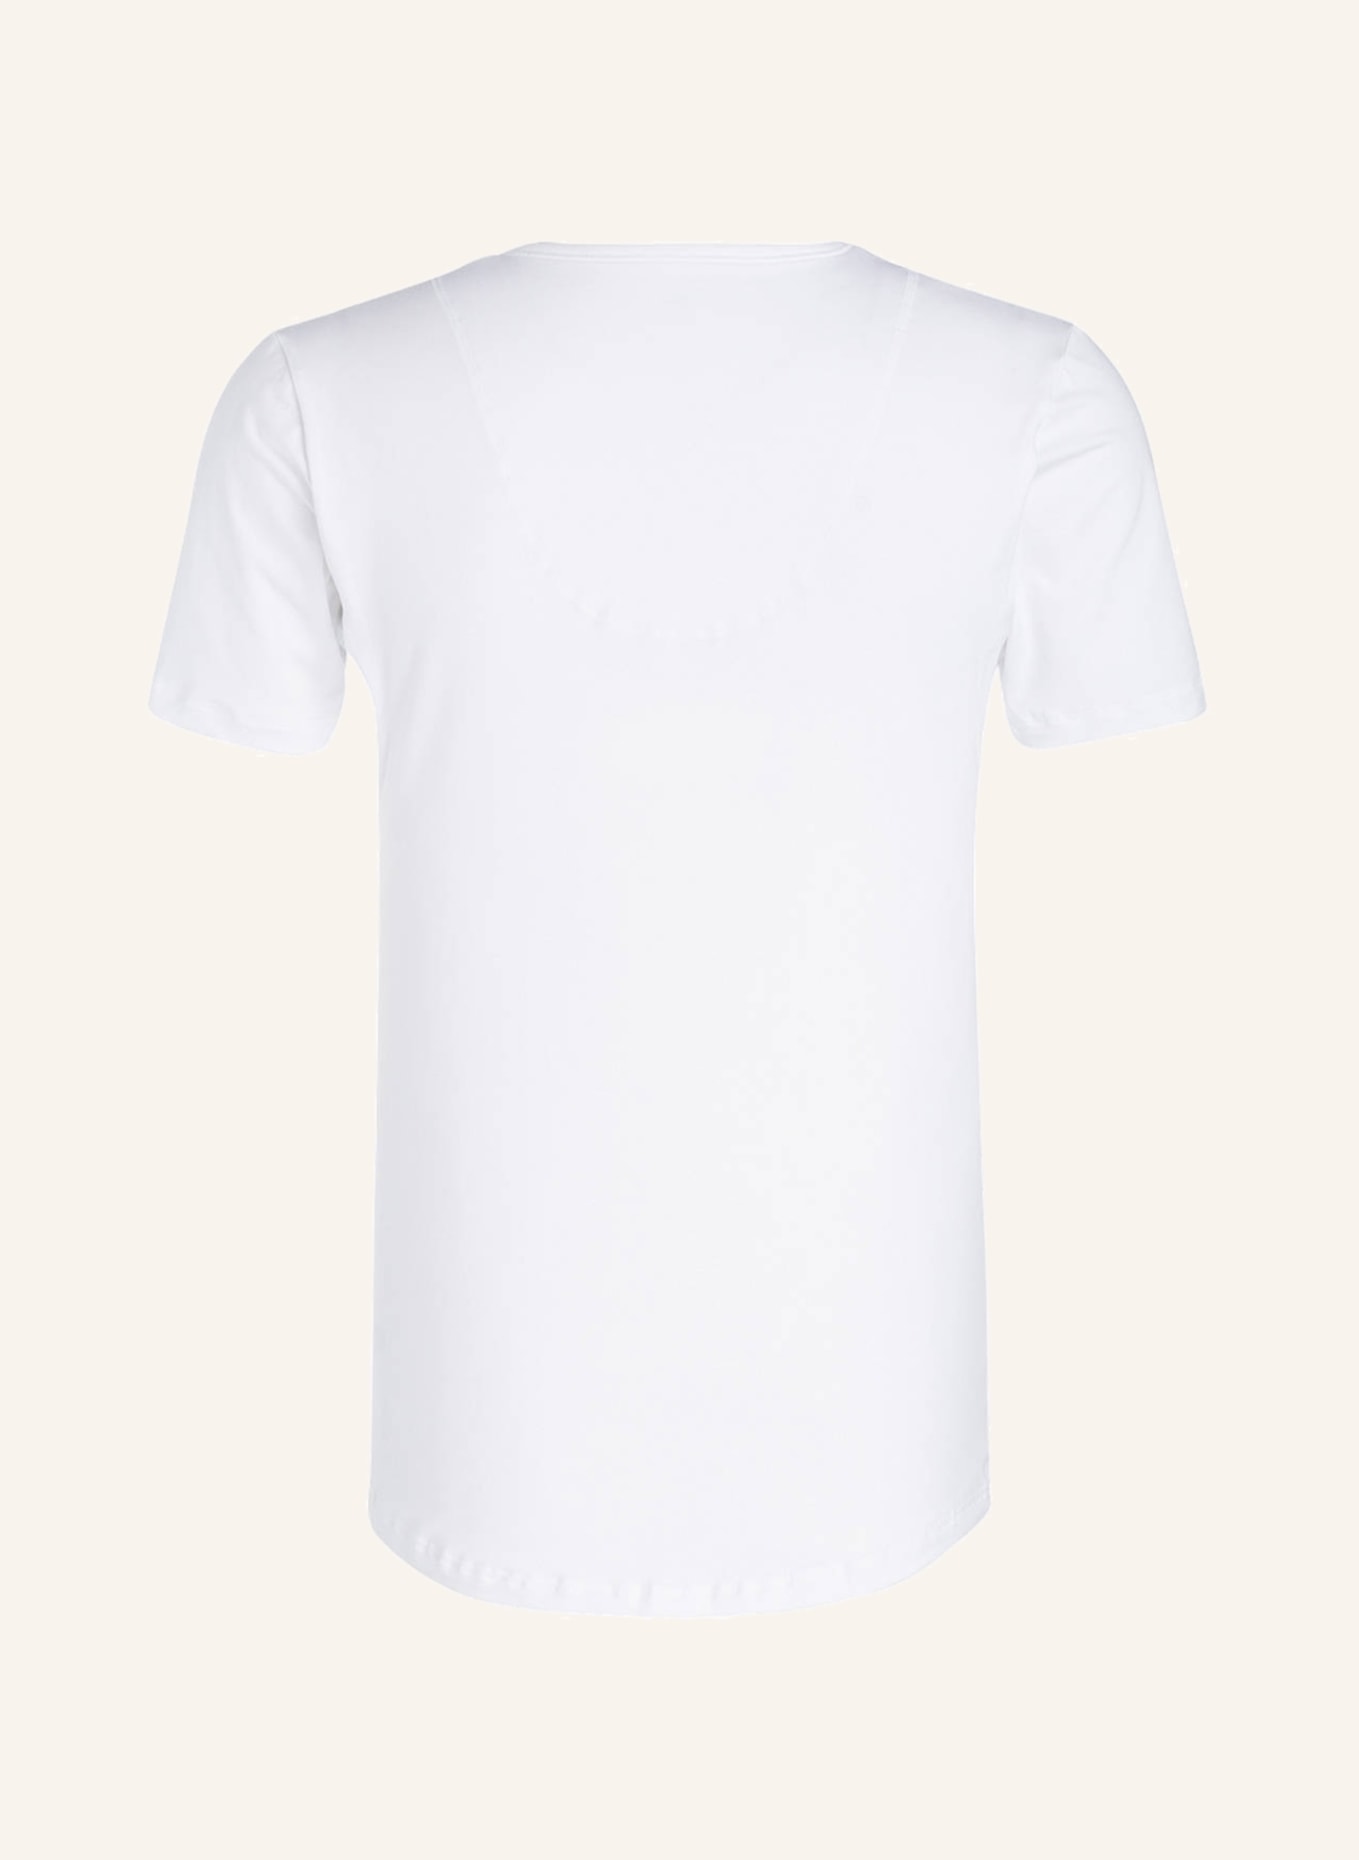 mey V-shirt series DRY COTTON, Color: WHITE (Image 2)